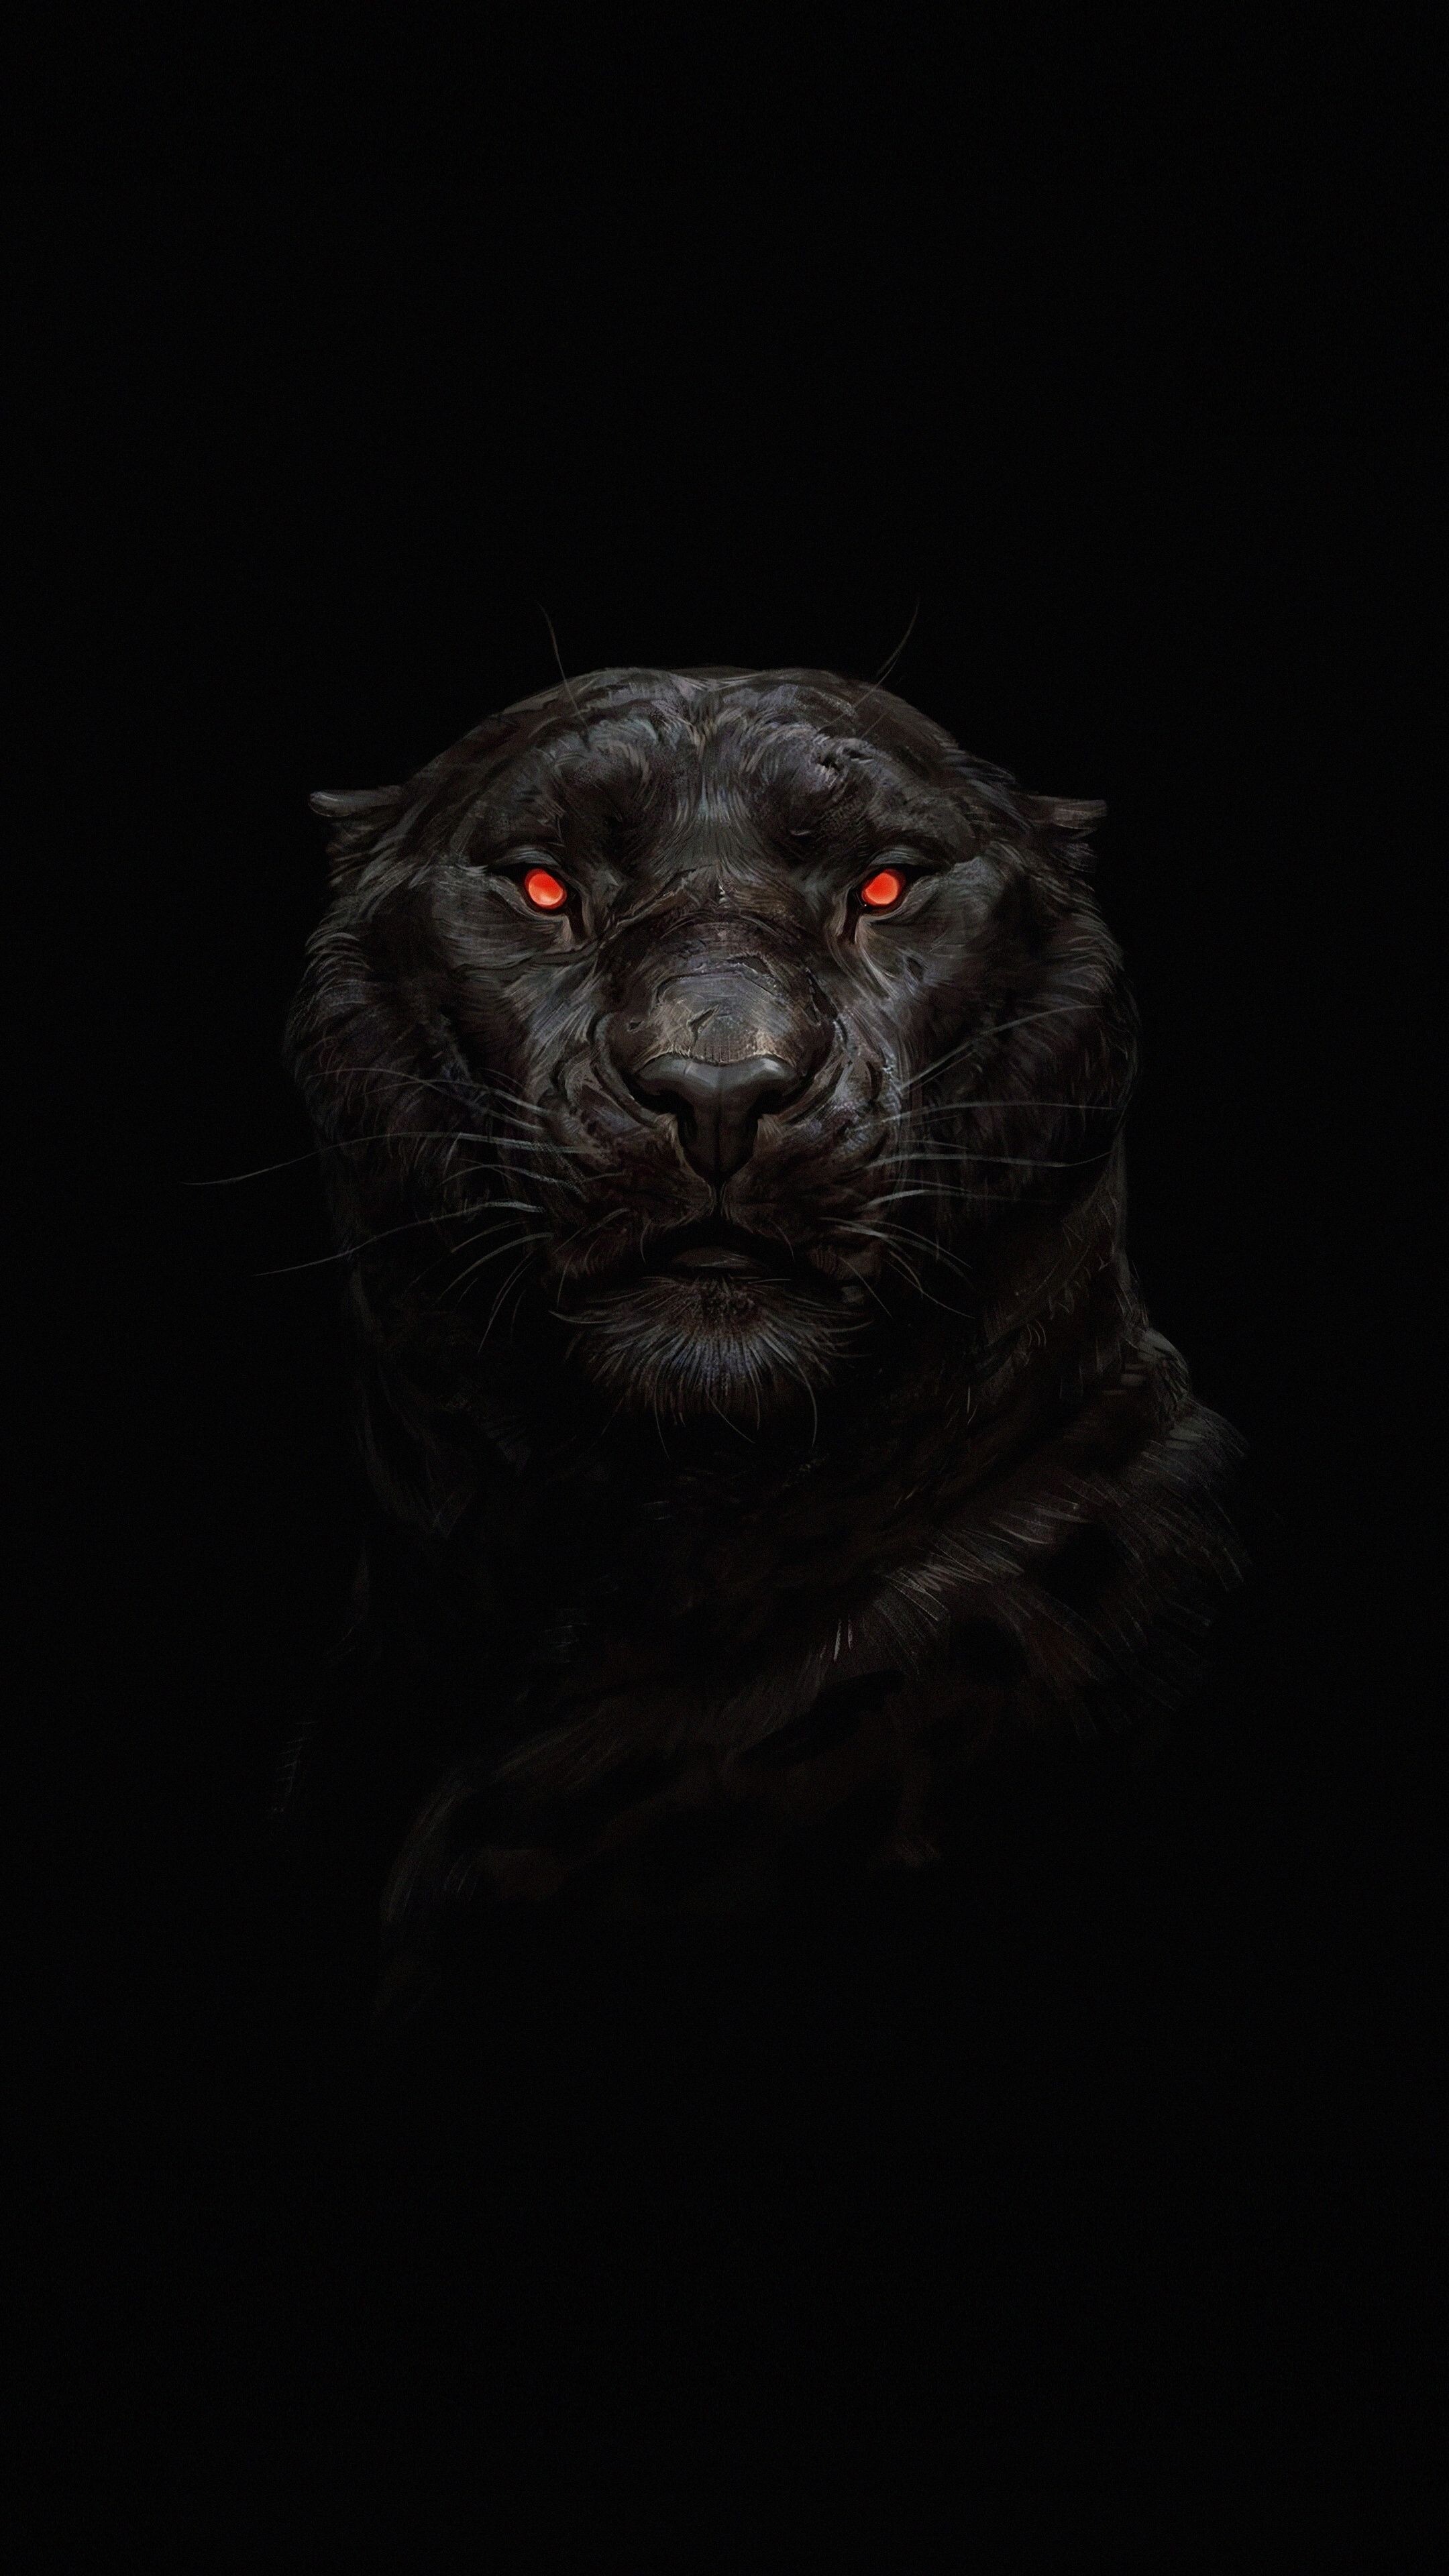 Glow in the Dark: Glowing eyes in the dark, Wild cat, Neon effect, Minimalistic, Black jaguar. 2160x3840 4K Background.